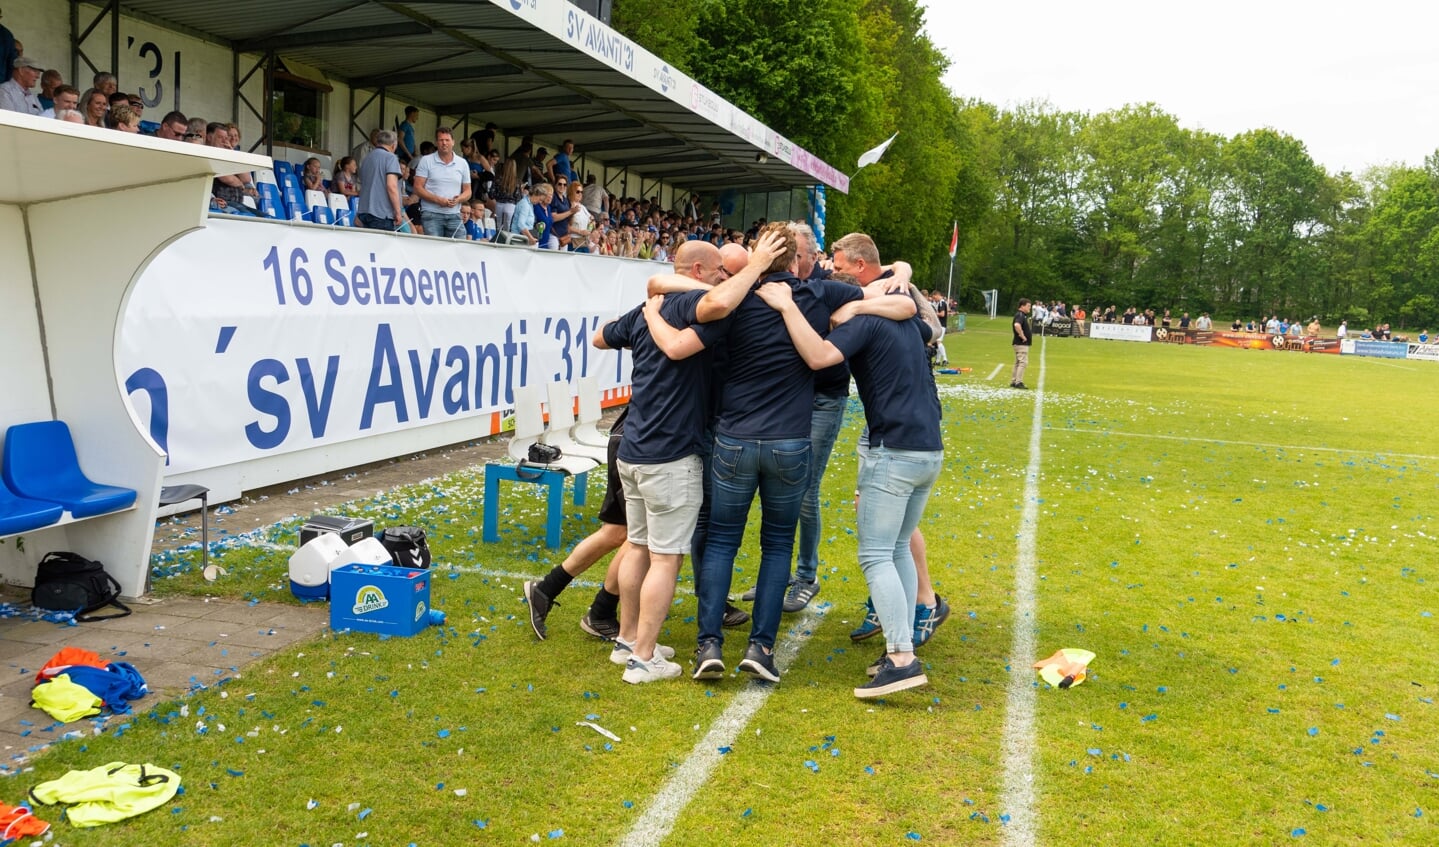 Kampioenswedstrijd SV Avanti'31.